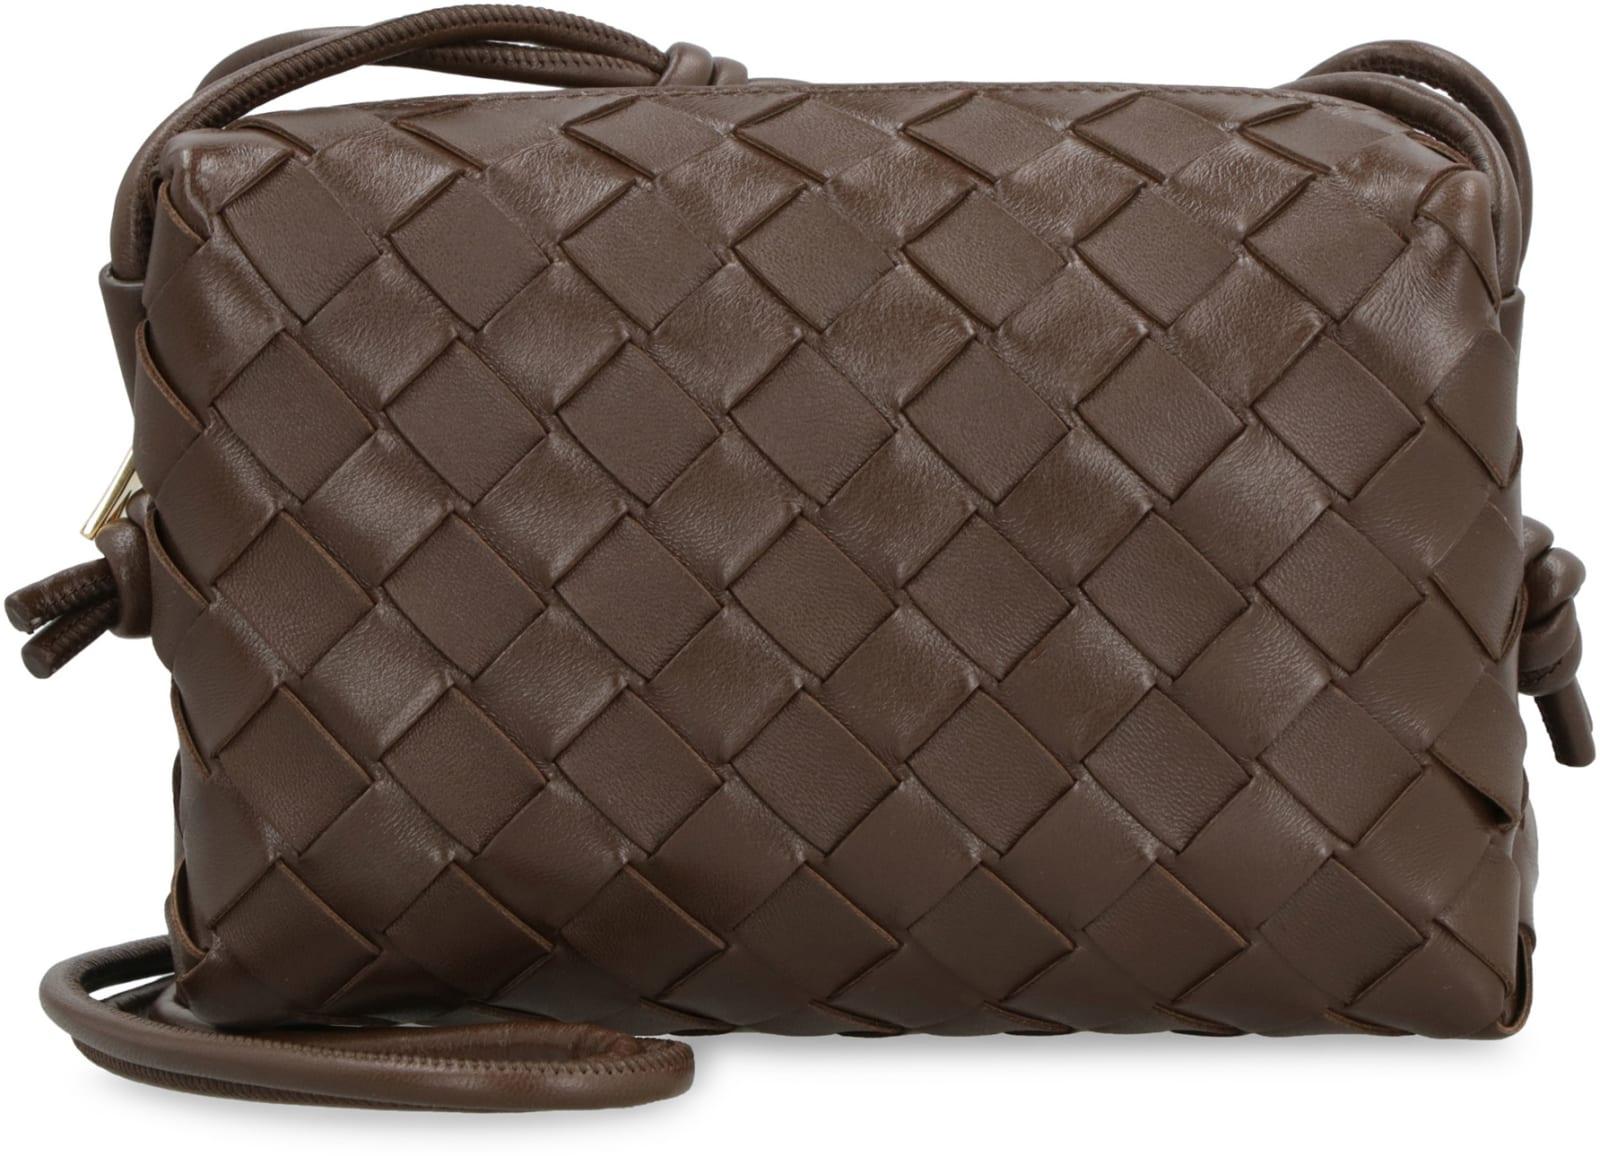 Bottega Veneta The Mini Pouch Dark Brown Leather Crossbody Bag